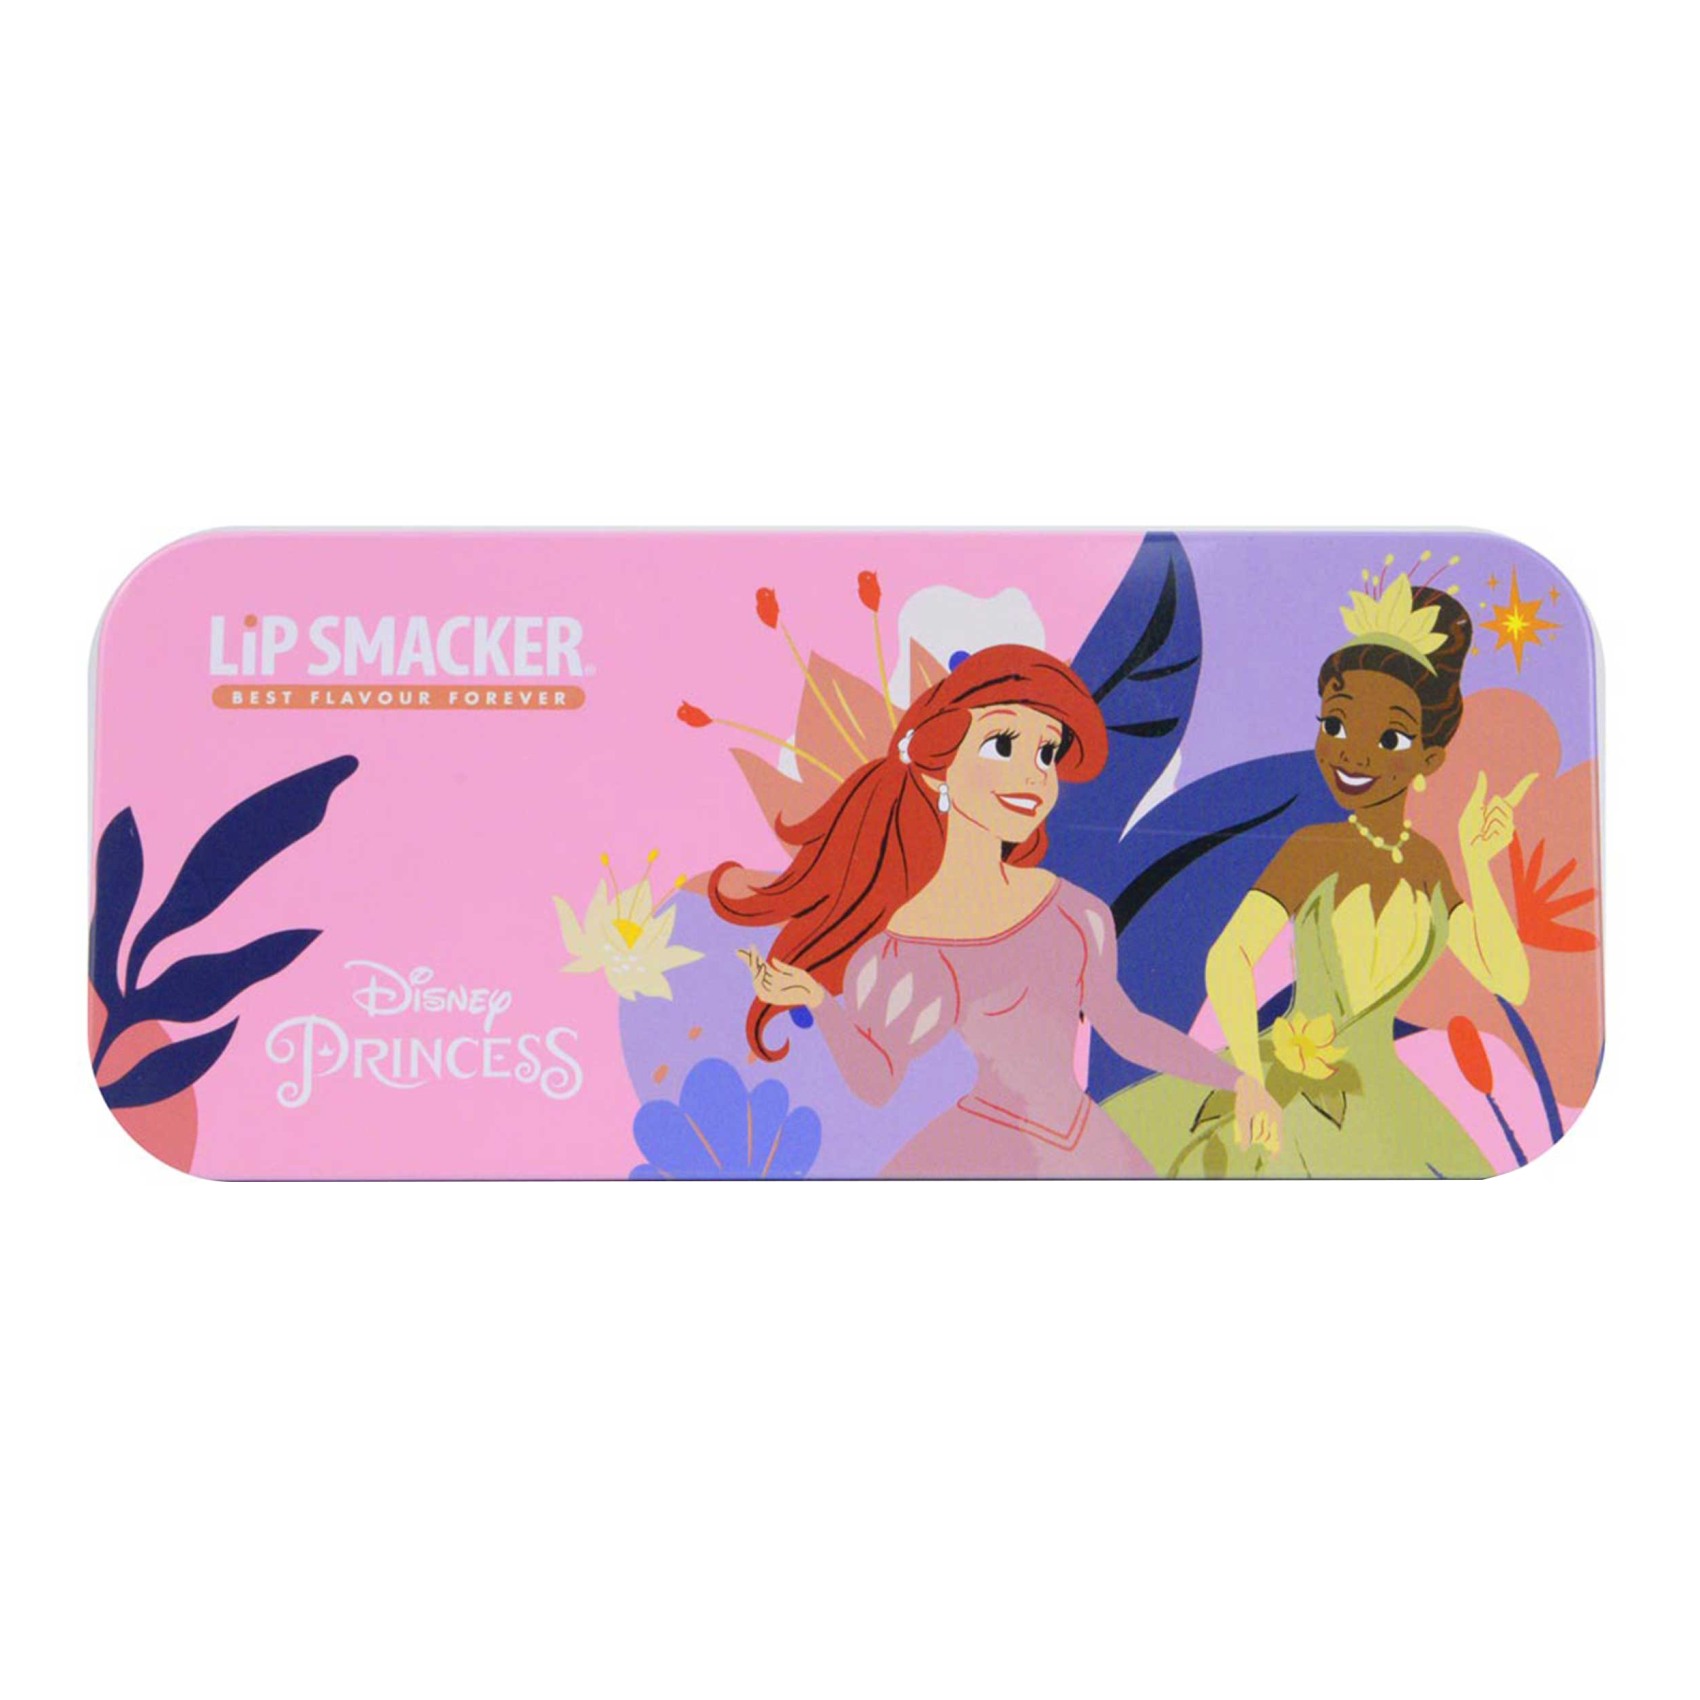 Lip Smacker Disney Princess Themed Nail Polish Set Tin